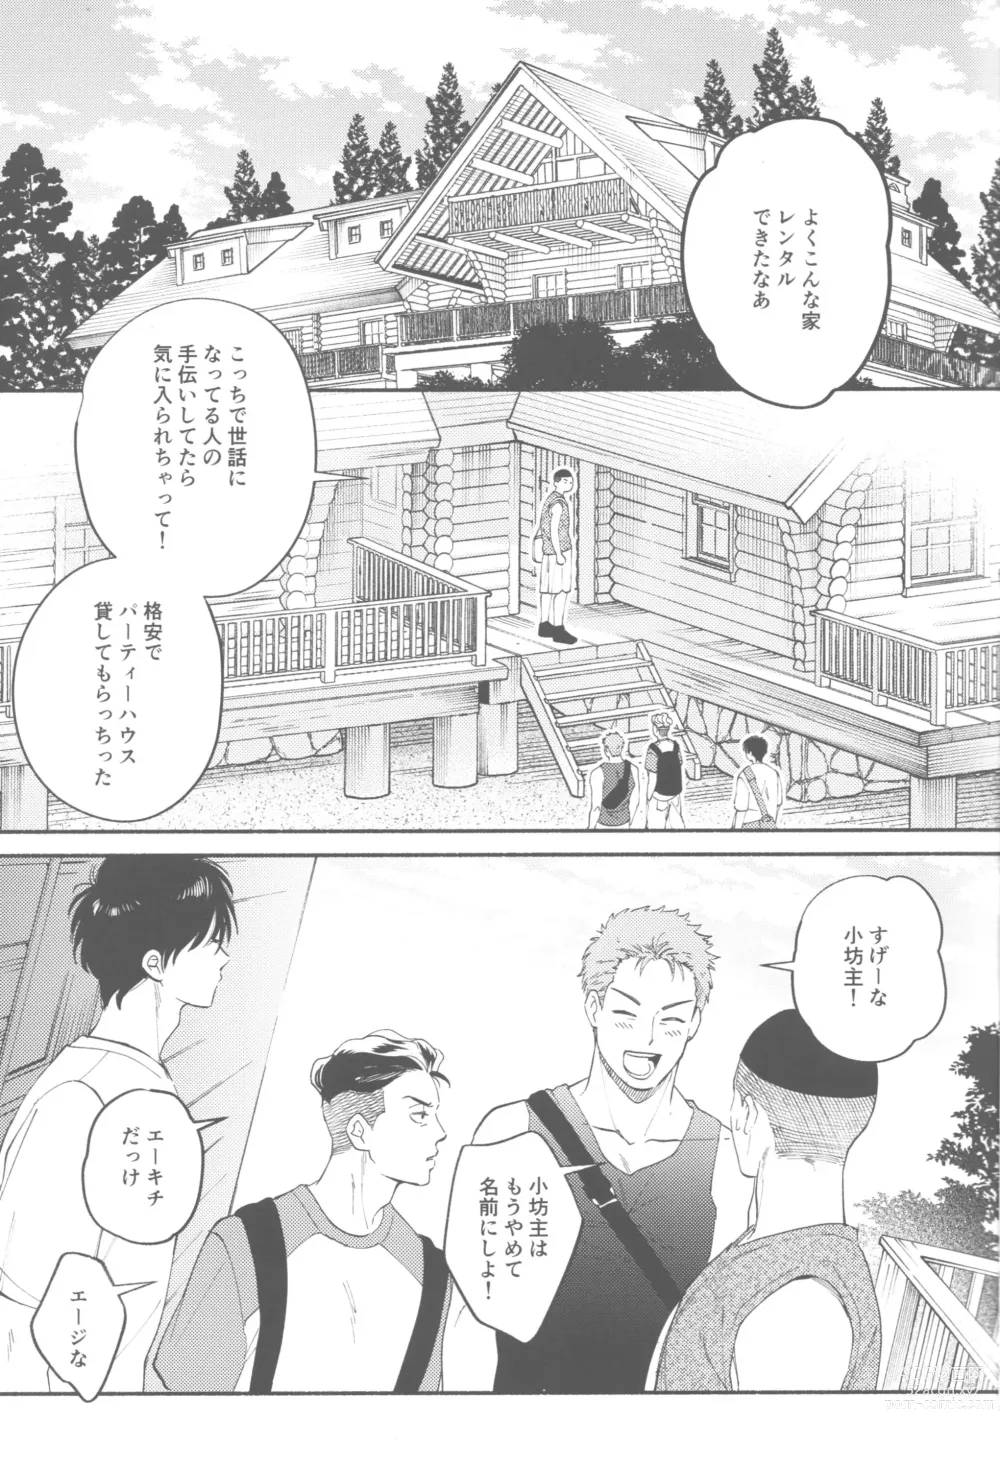 Page 4 of doujinshi TONDE AMERICA